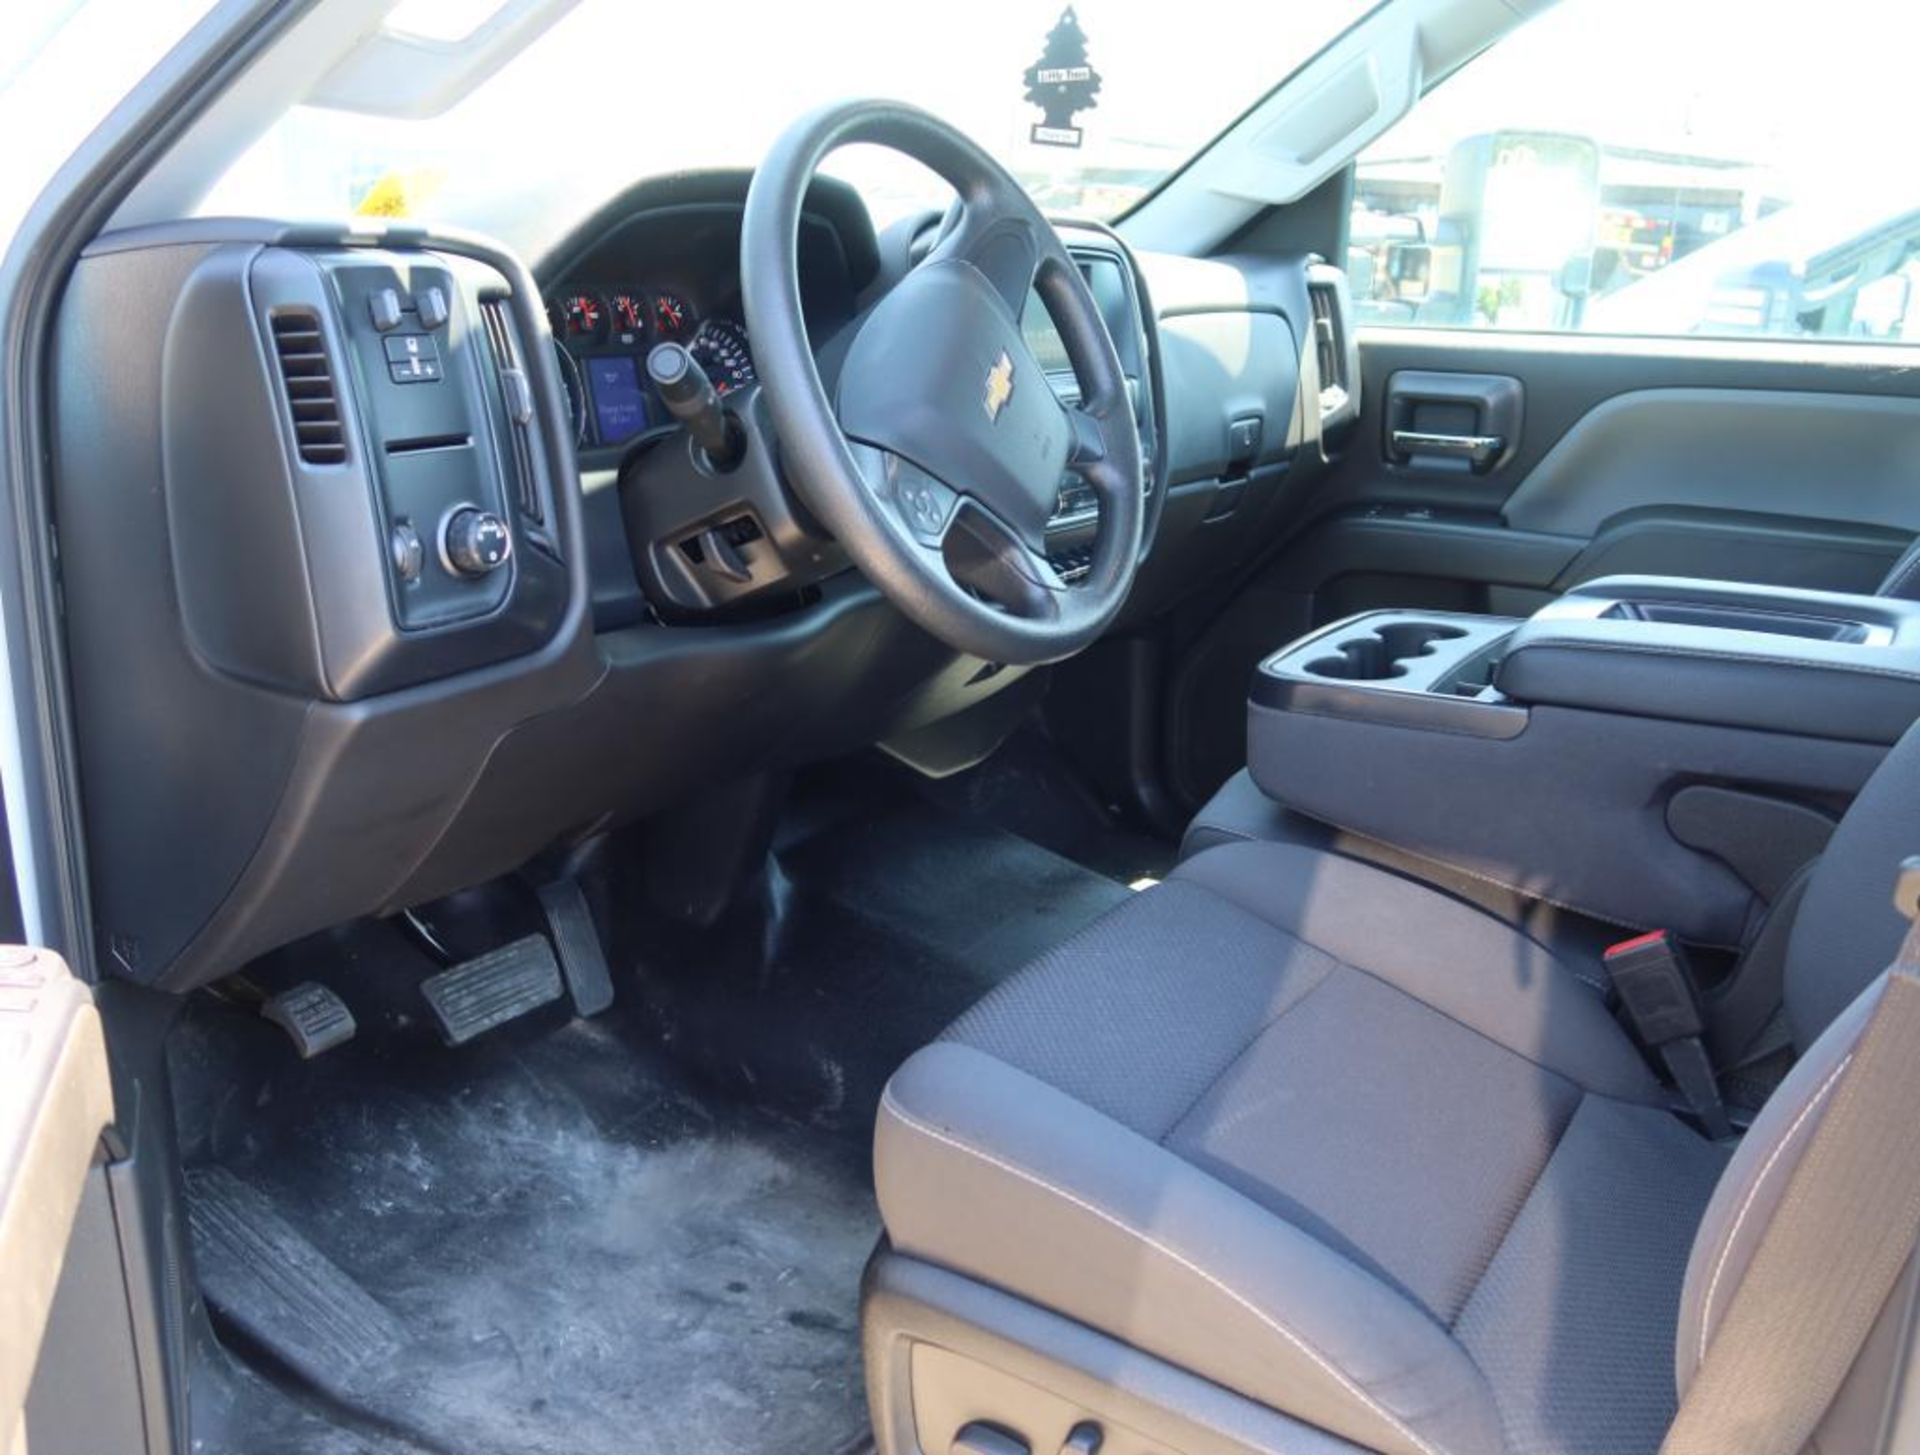 2020 Chevy Silverado 2WD 6.6L C4500 Turbo Diesel V8 Dual Wheel w/Utility Bed, Diesel, License# AT2 1 - Image 6 of 8